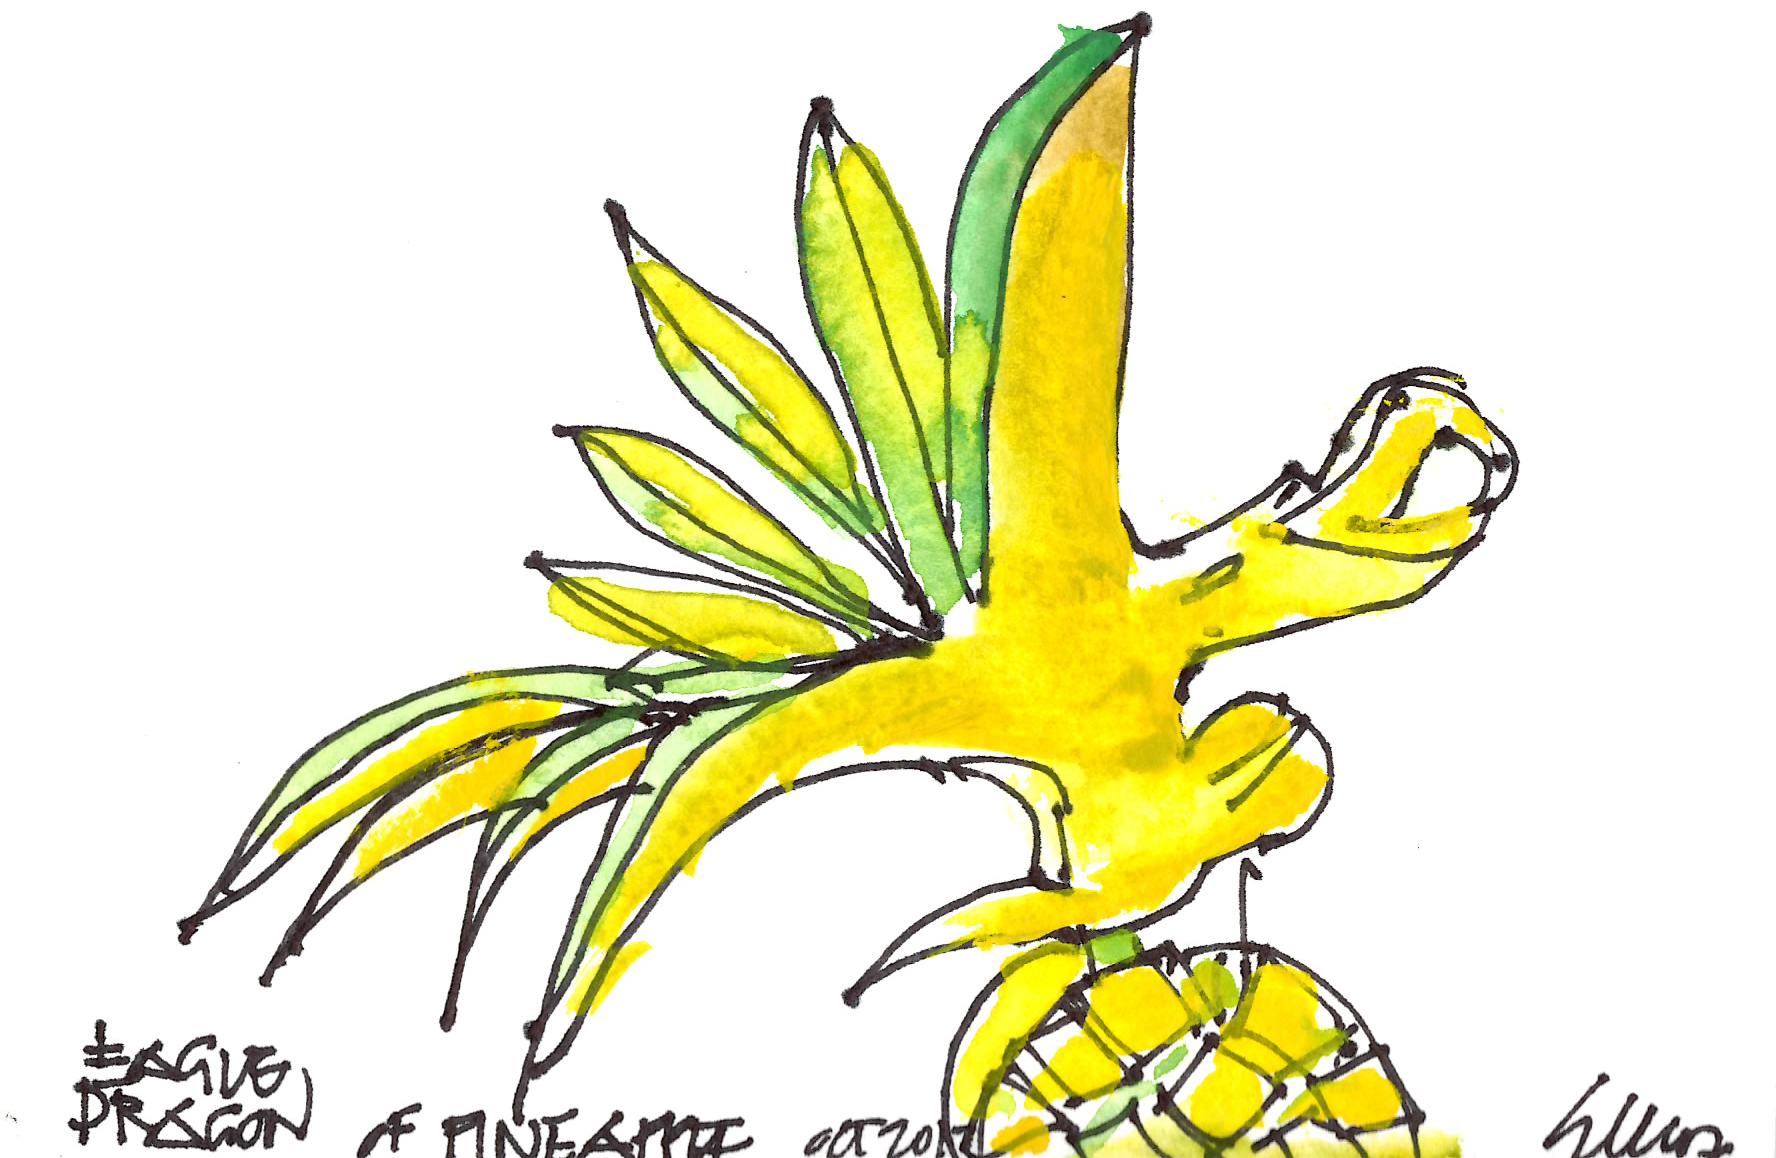  eagle dragon of pineapple 10.13 